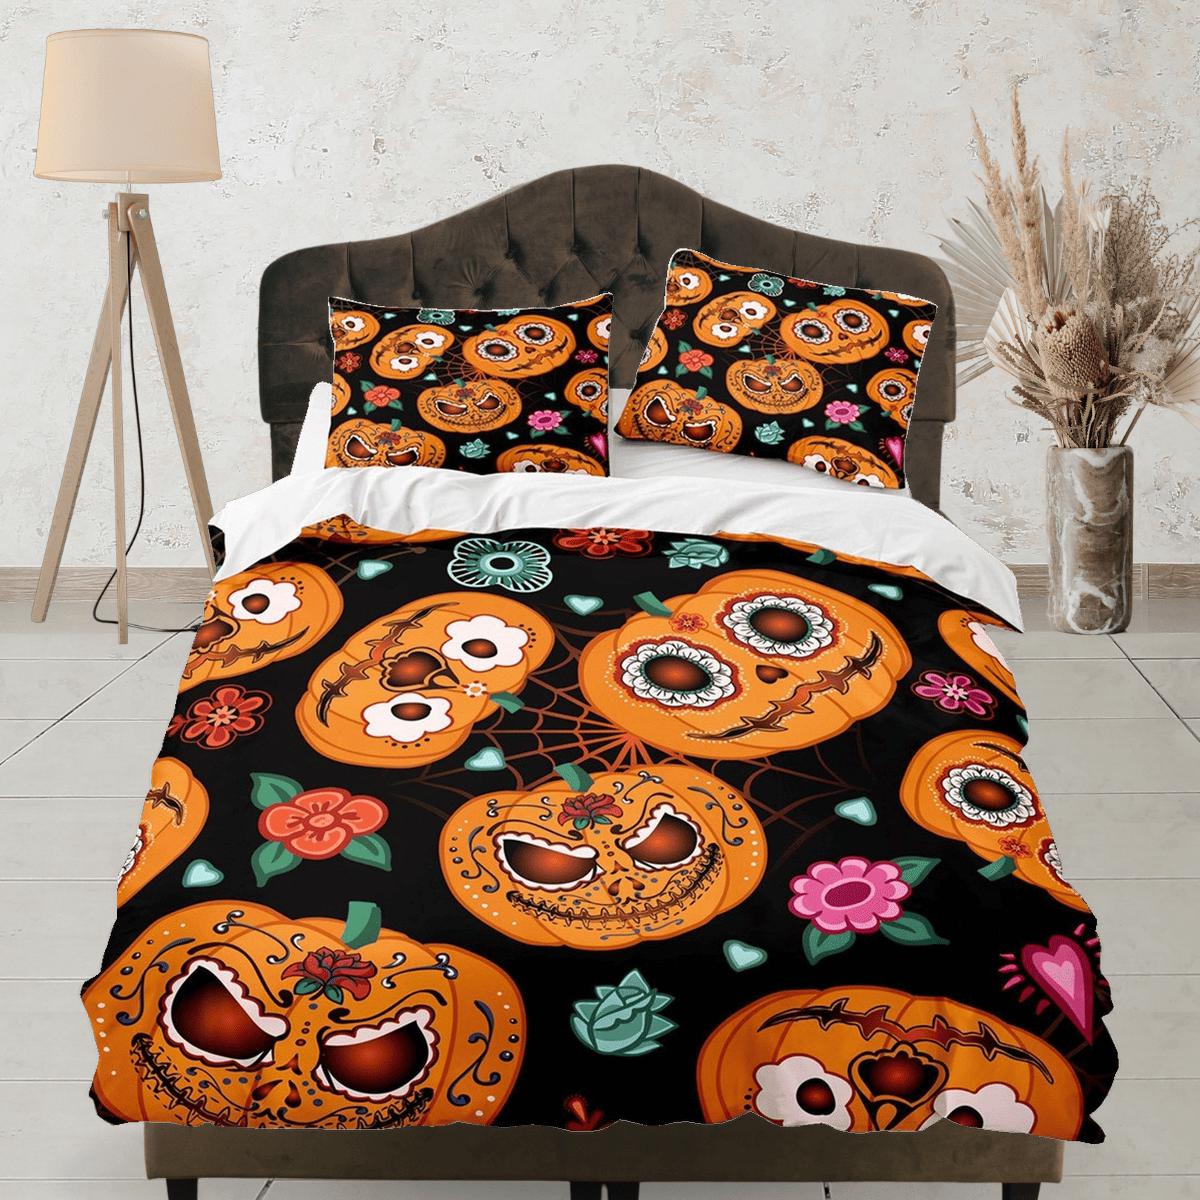 daintyduvet Cinco de mayo style pumpkin halloween full size bedding & pillowcase, duvet cover set dorm bedding, nursery toddler bedding, halloween gift